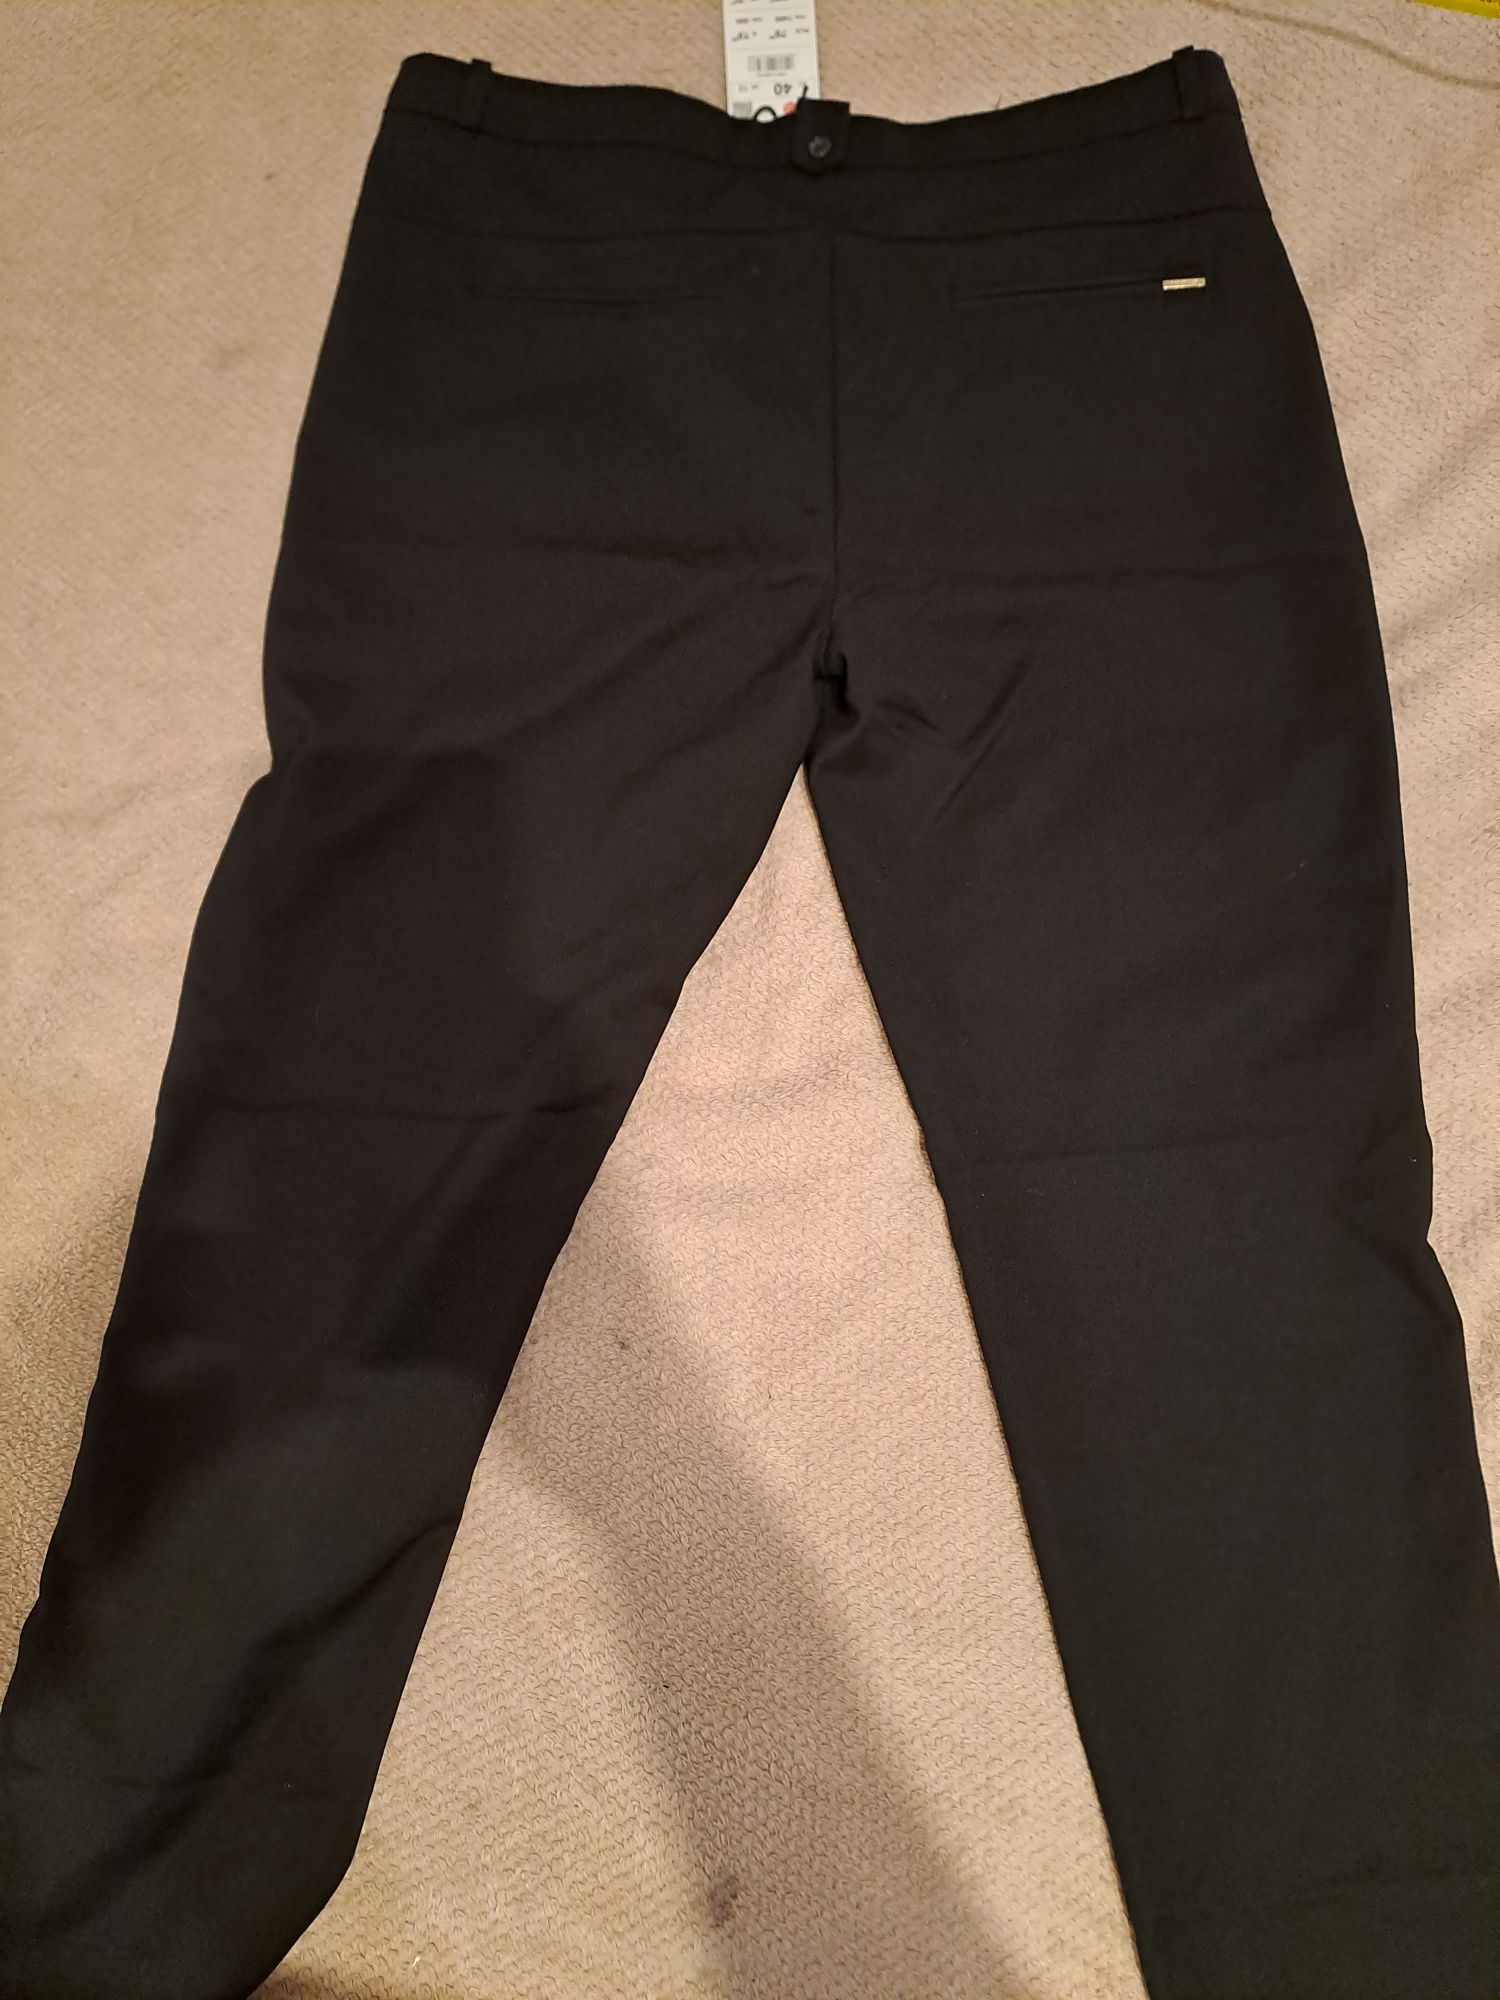 Nowe eleganckie spodnie reserved,  rozmiar 40, czarne damskie